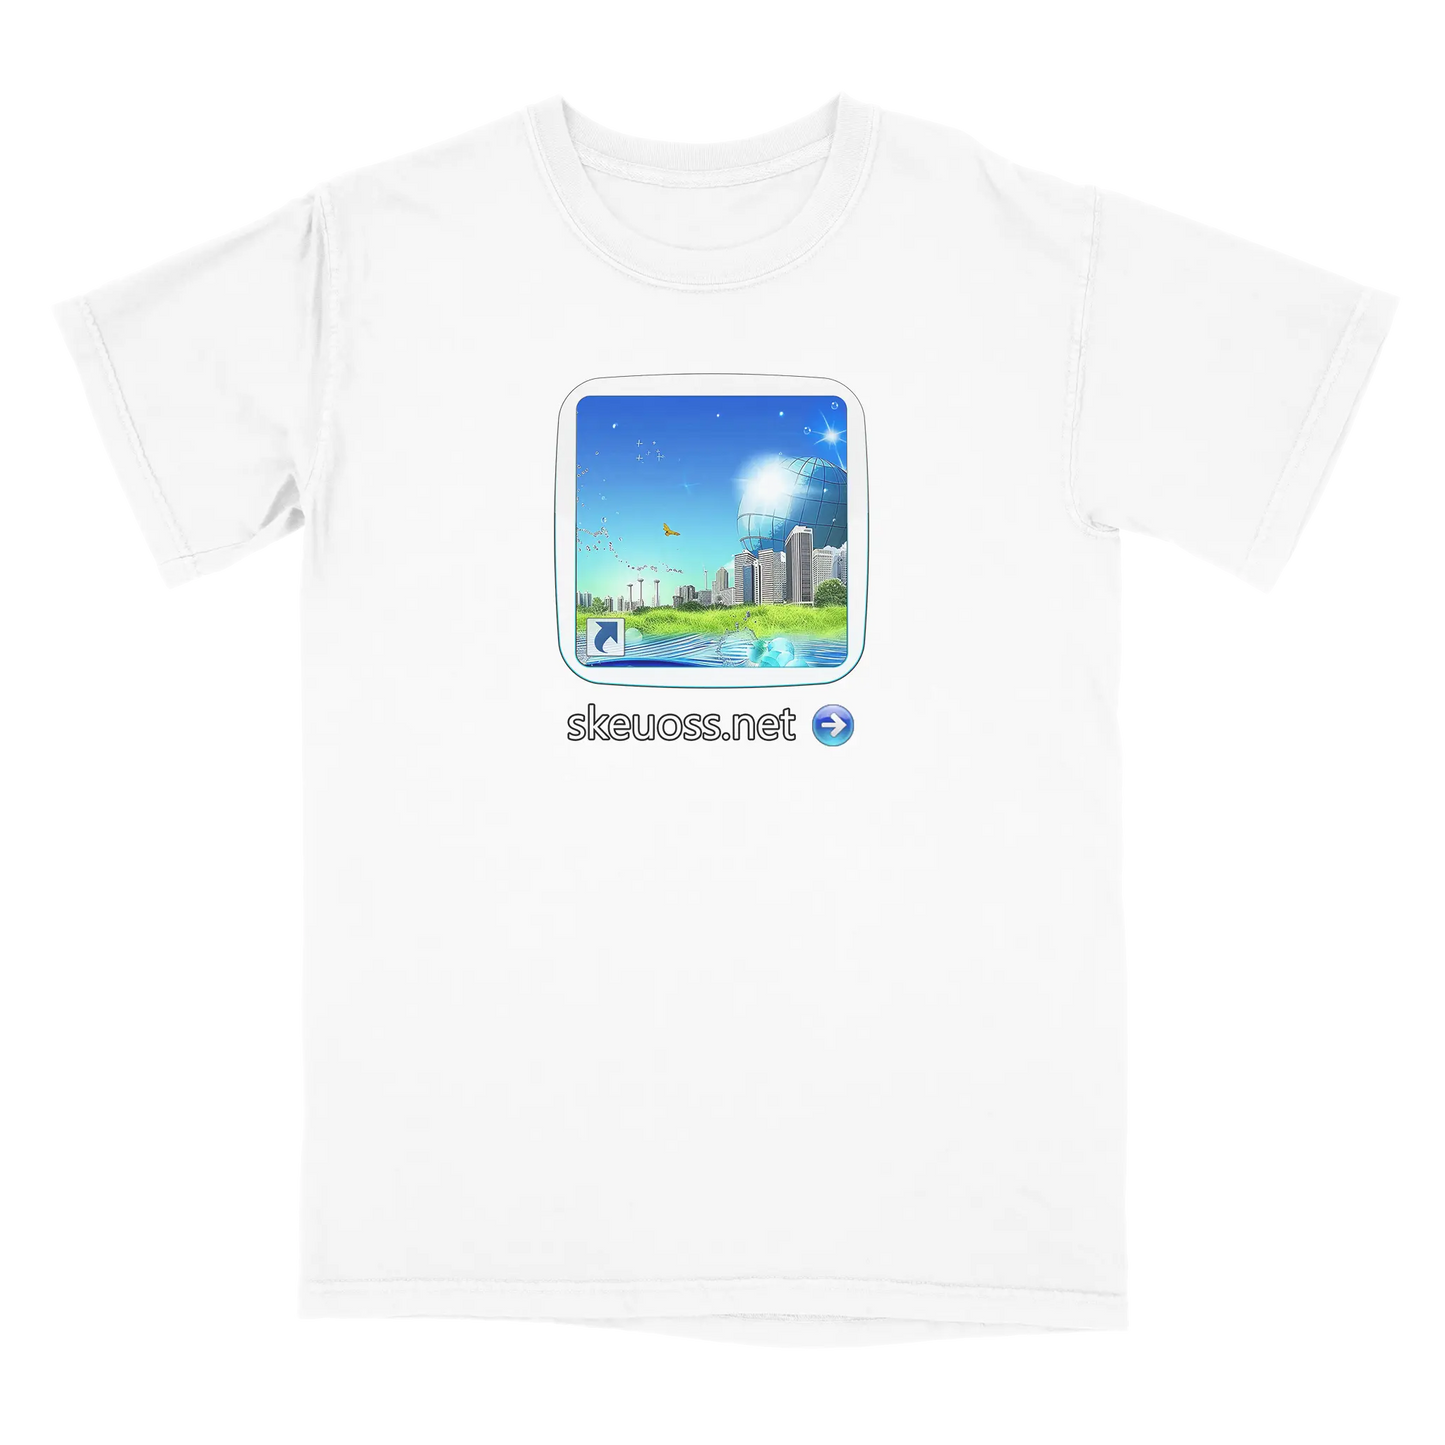 Frutiger Aero T-shirt - User Login Collection - User 387